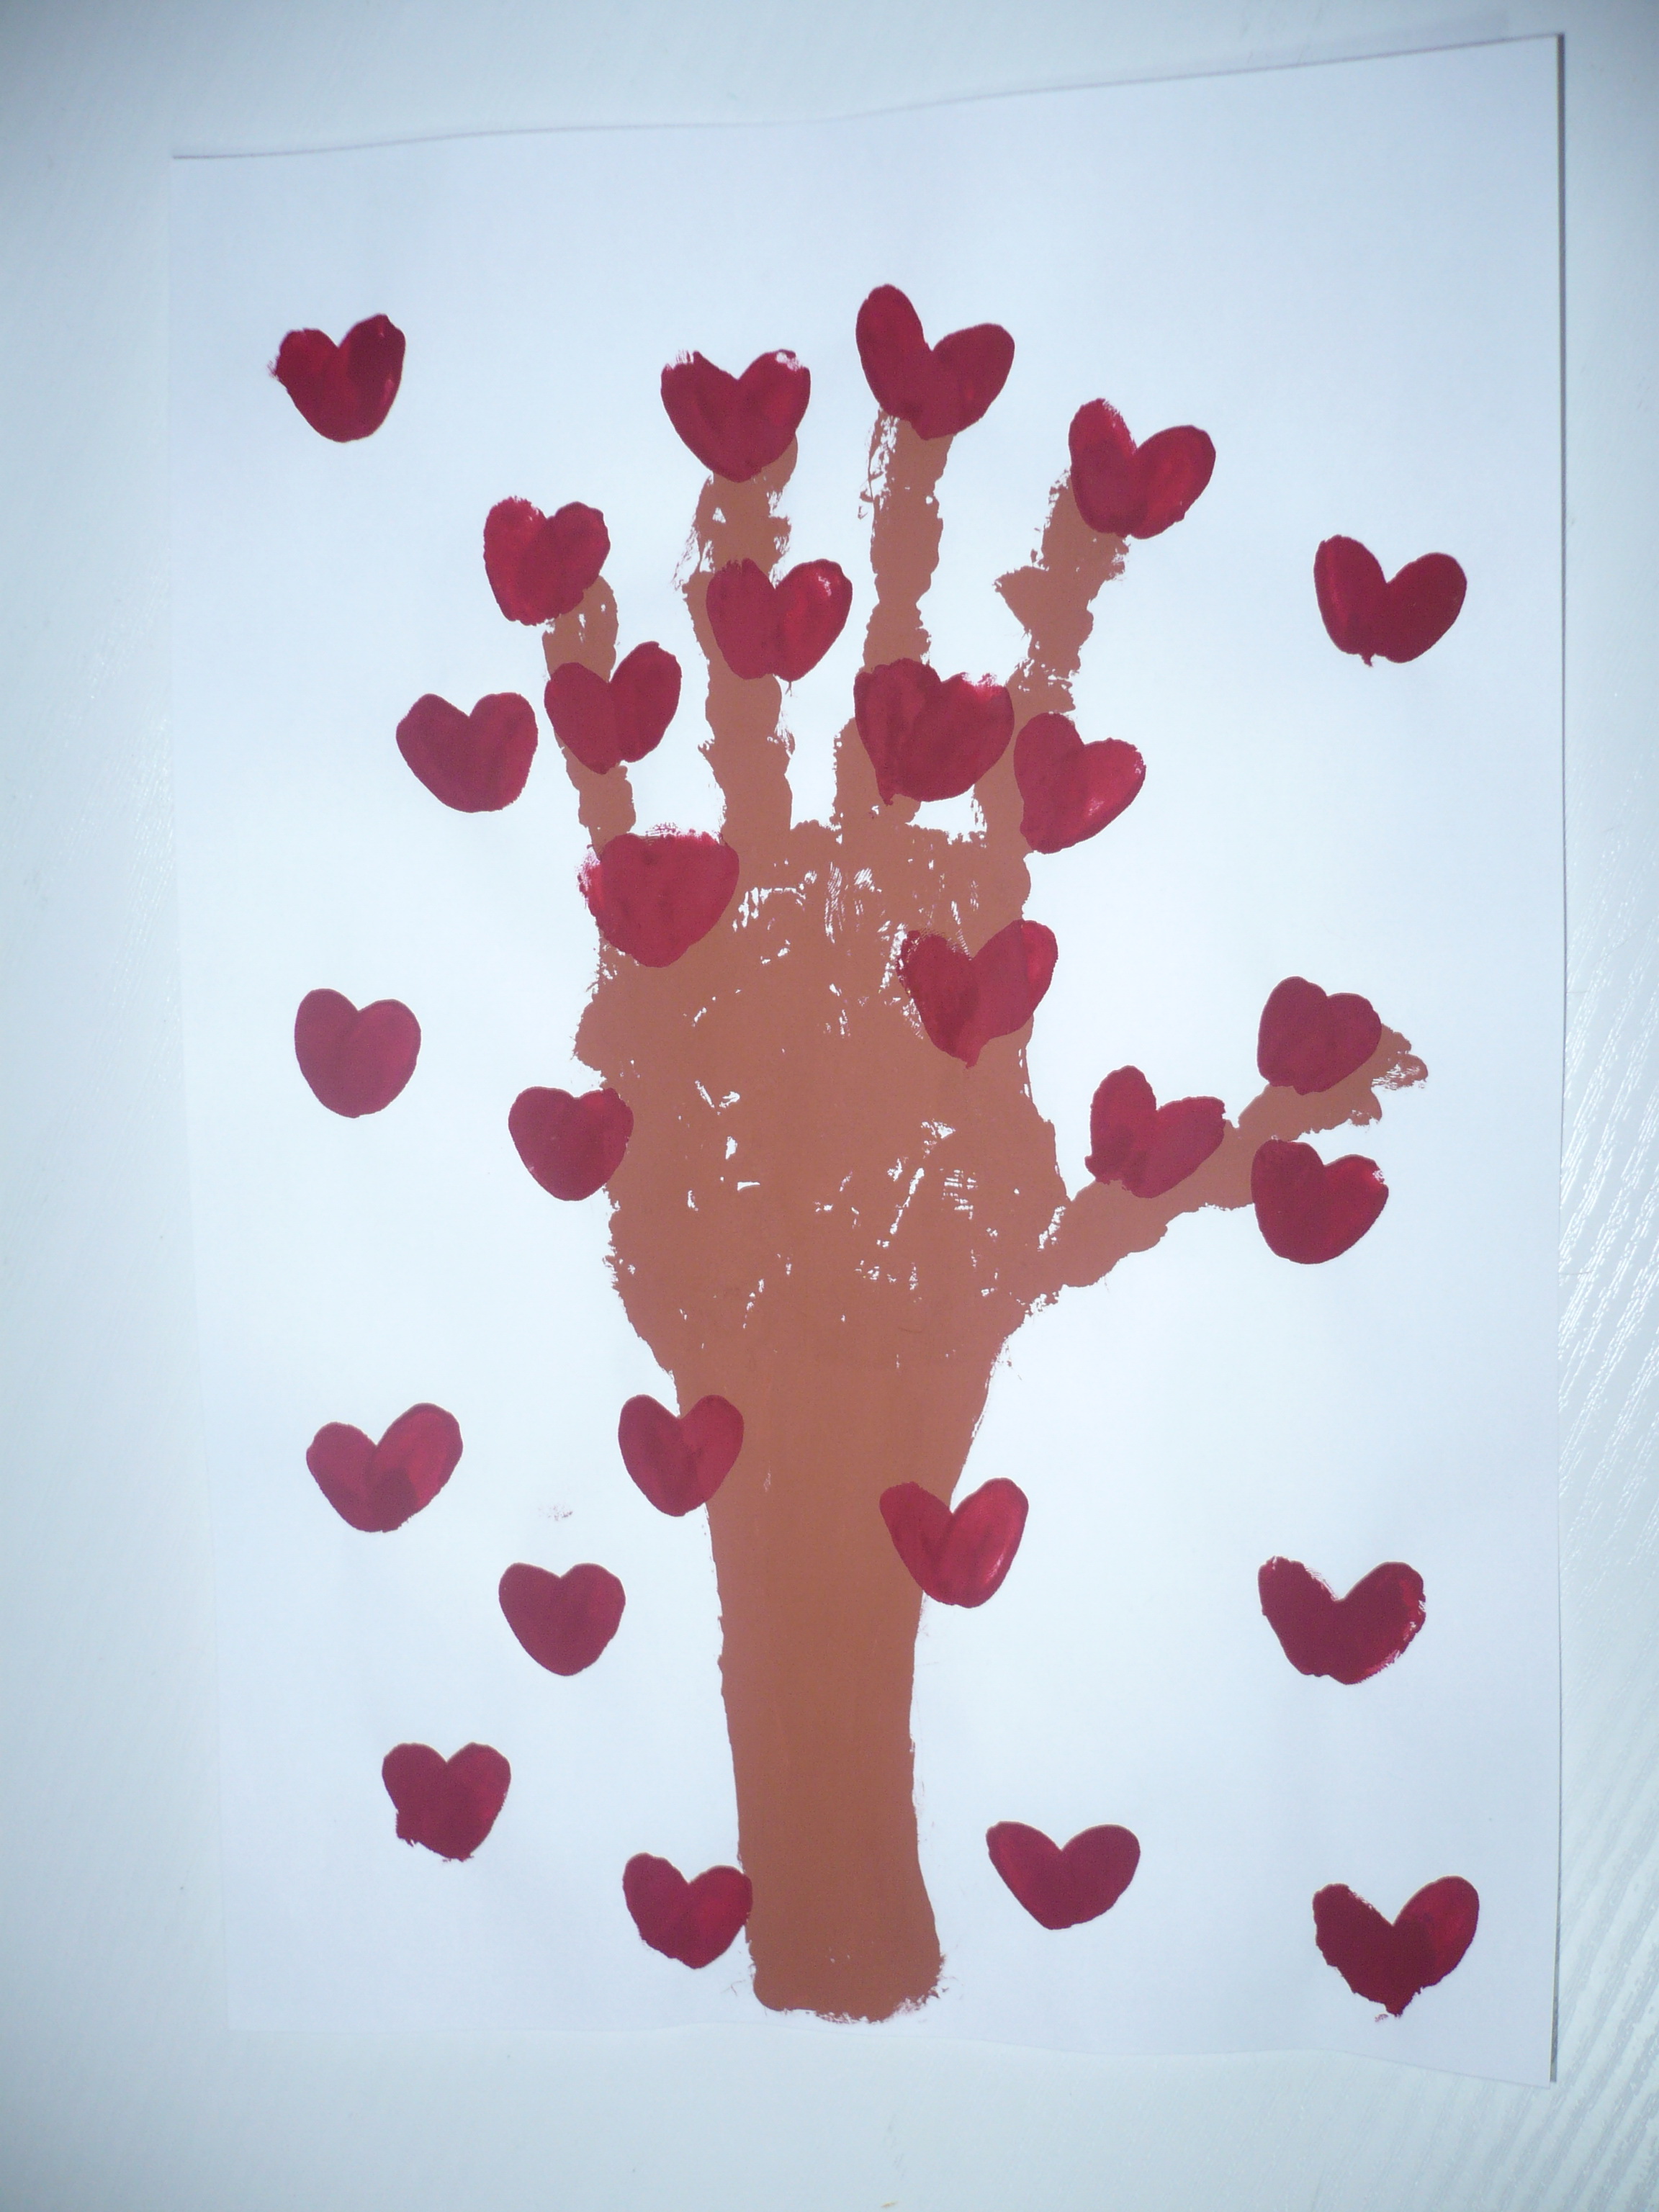 Handprint Tree of Hearts | Fun Family Crafts